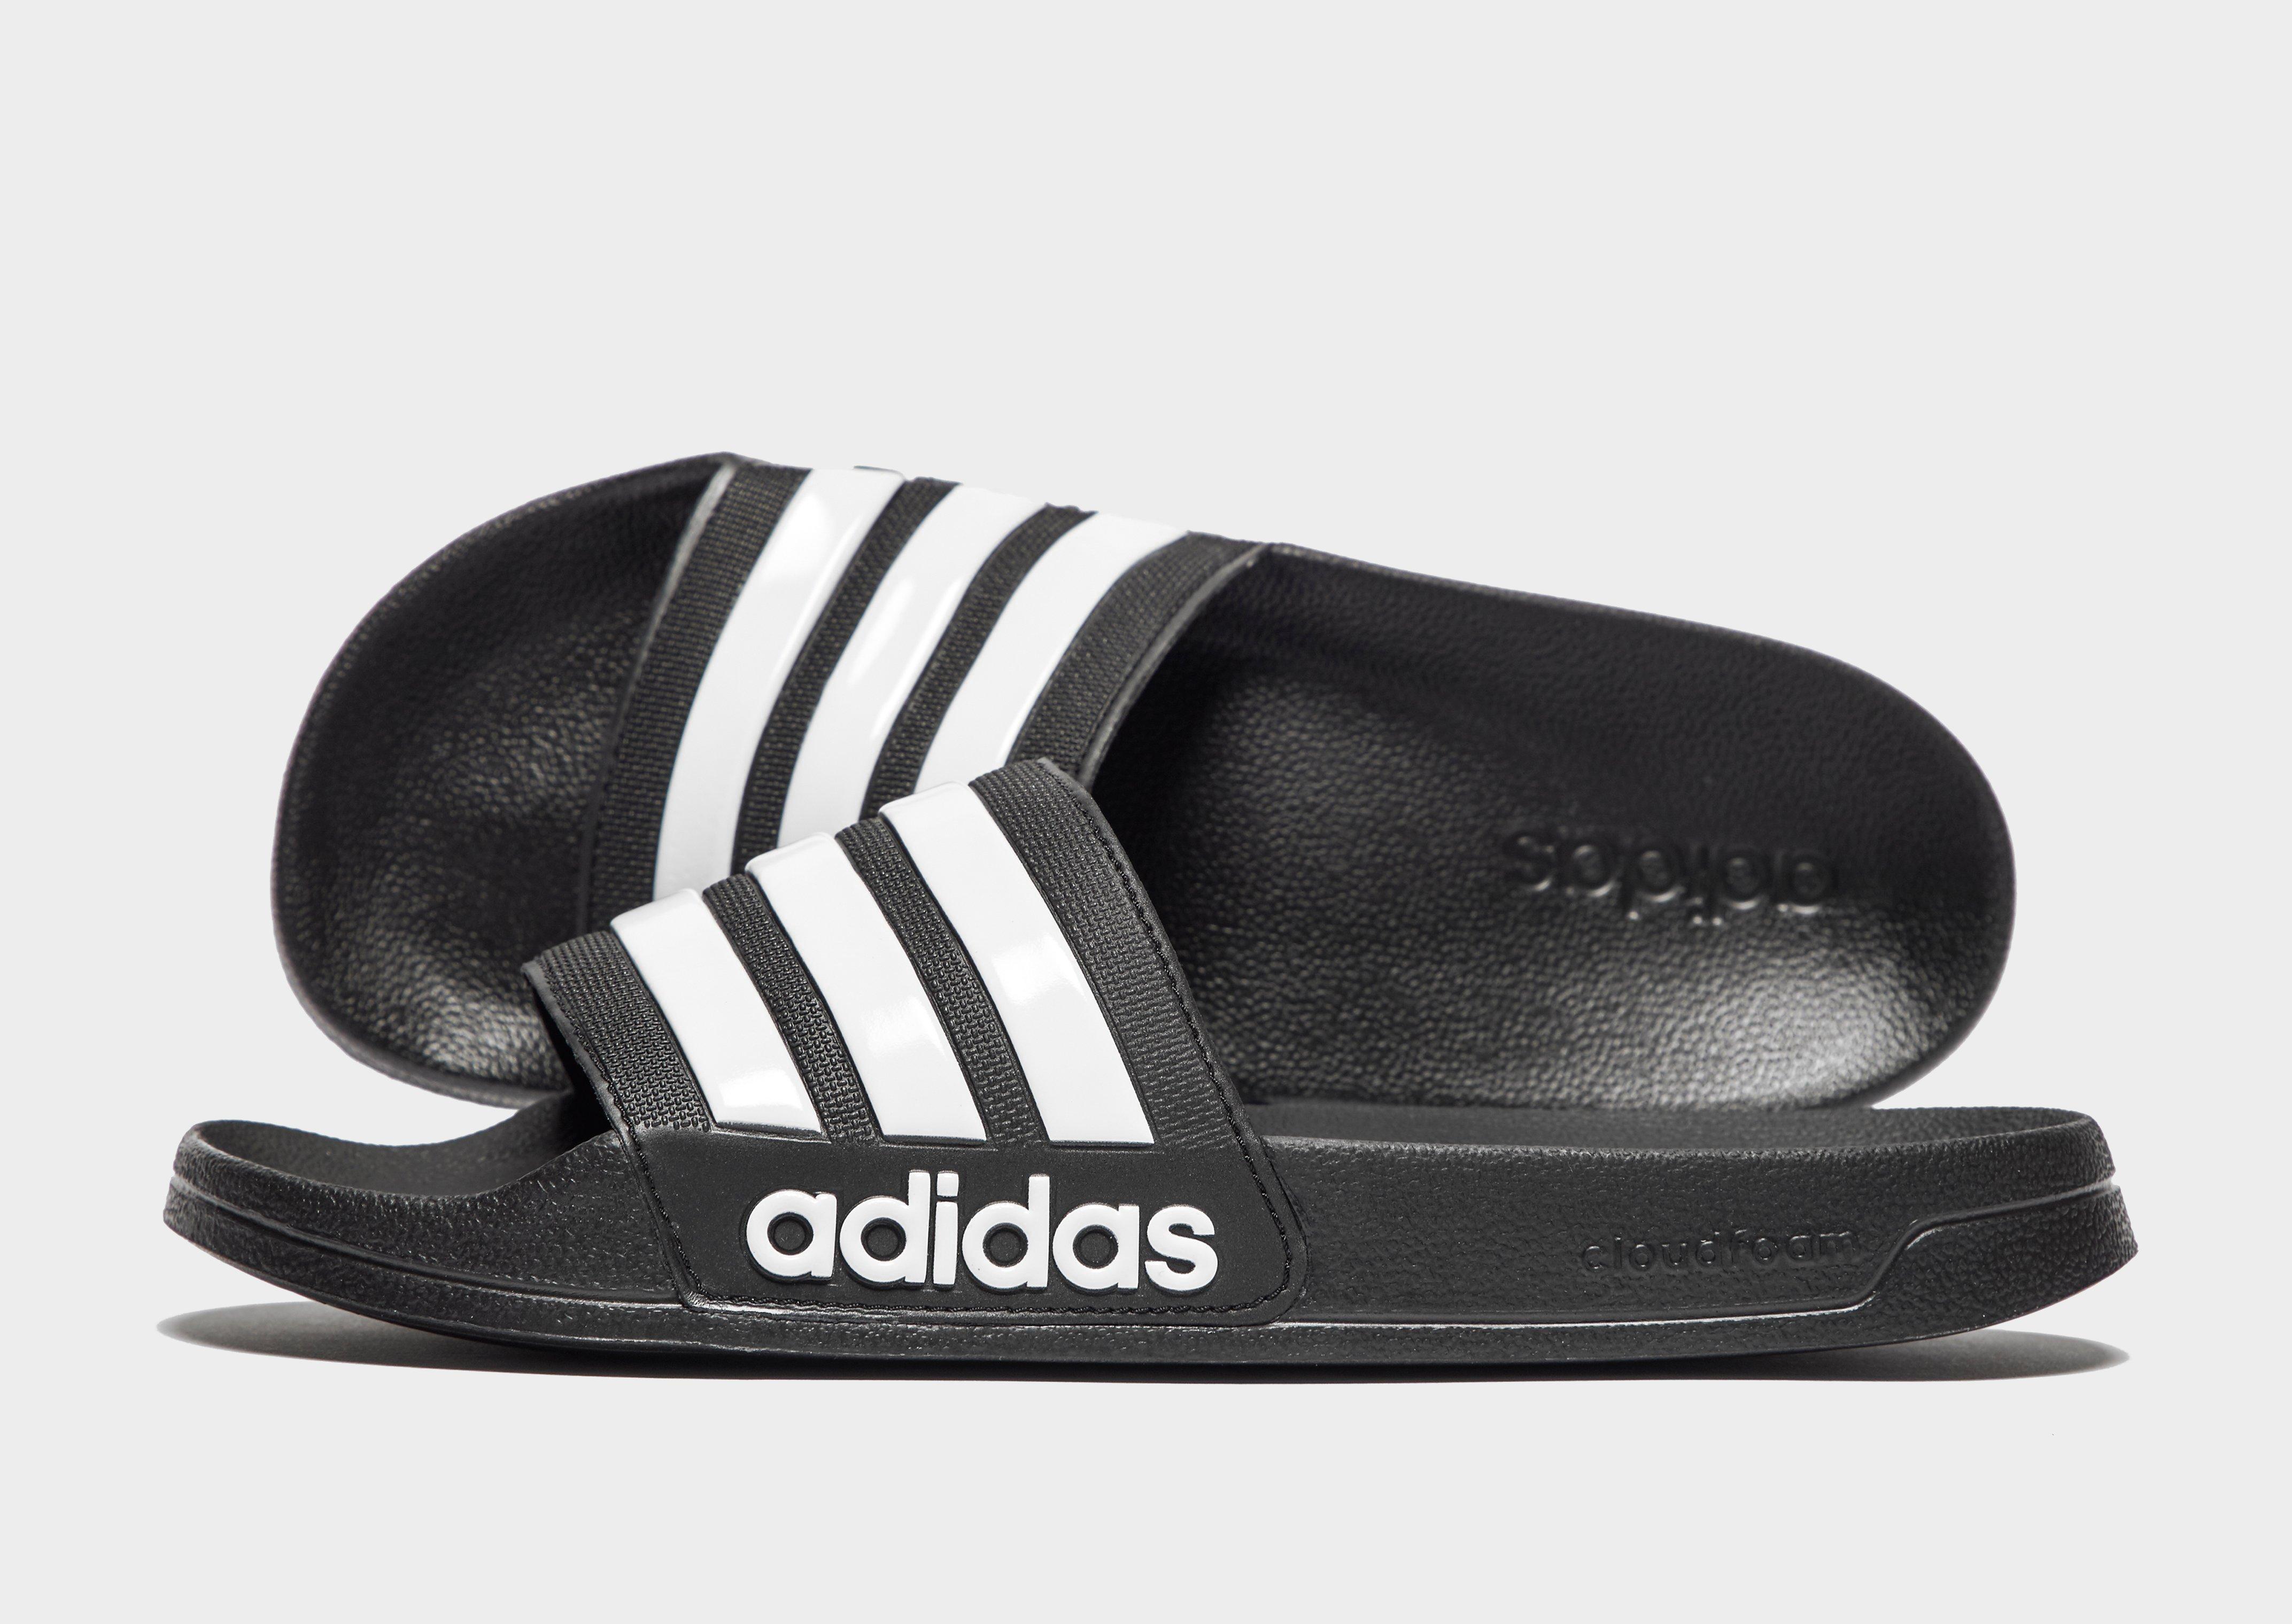 adidas slippers slide